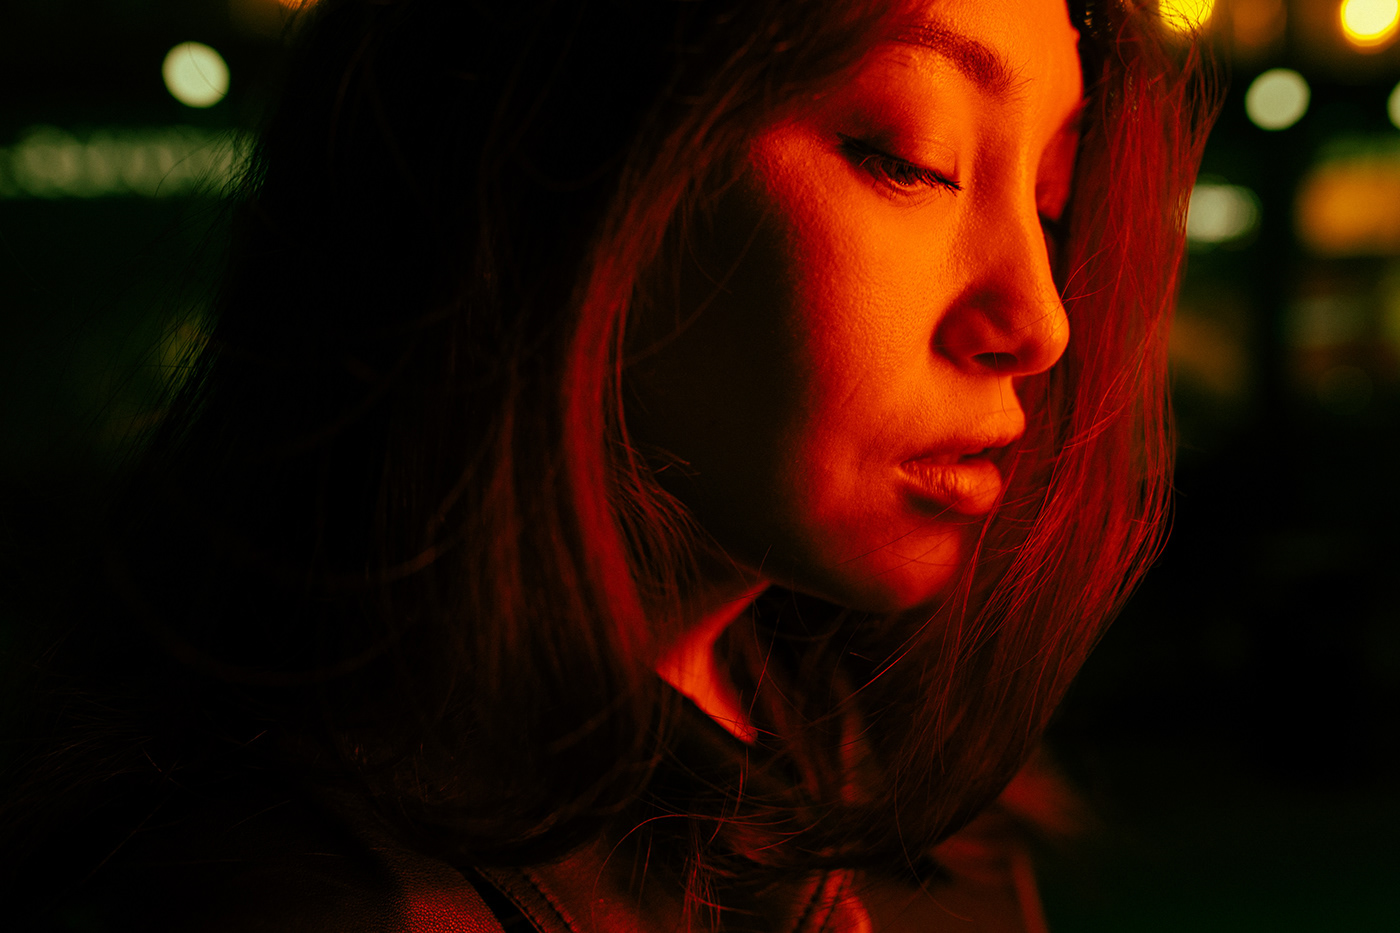 night photography night portrait street photography asian woman portrait Photography  portrait lightroom photoshoot Street Light